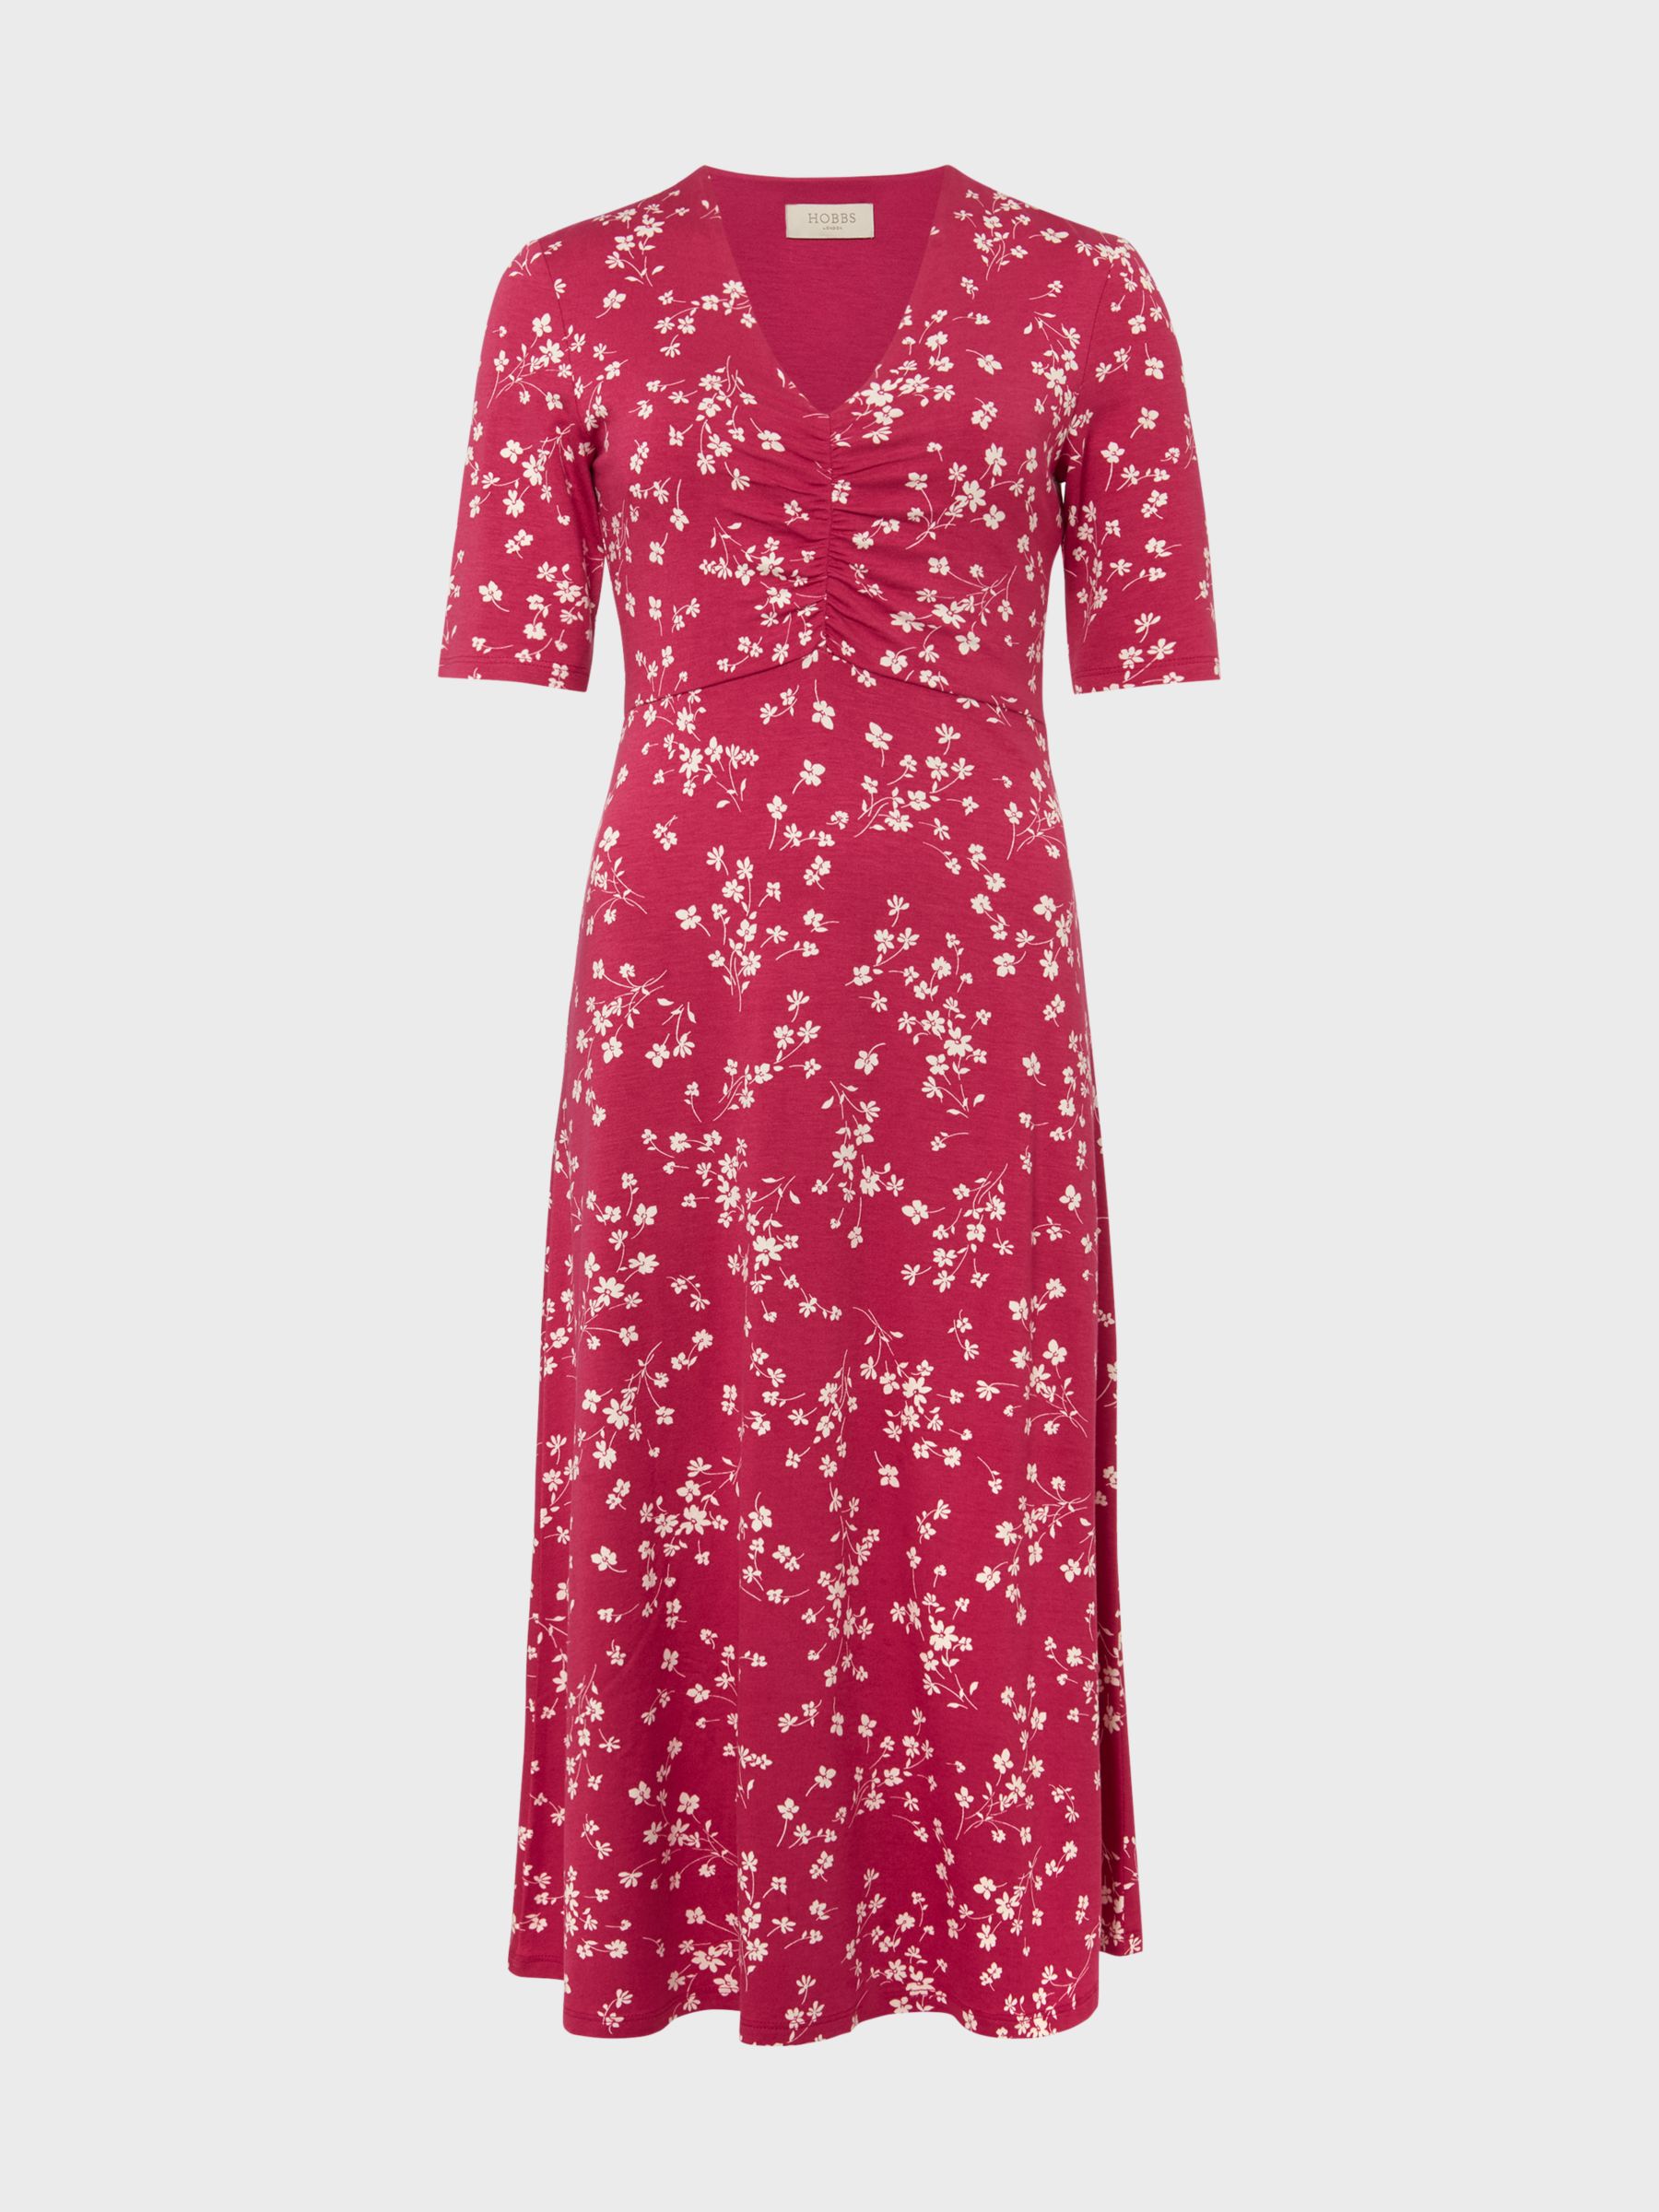 Hobbs Frankie Floral Print Jersey Dress, Raspberry/Ivory at John Lewis ...